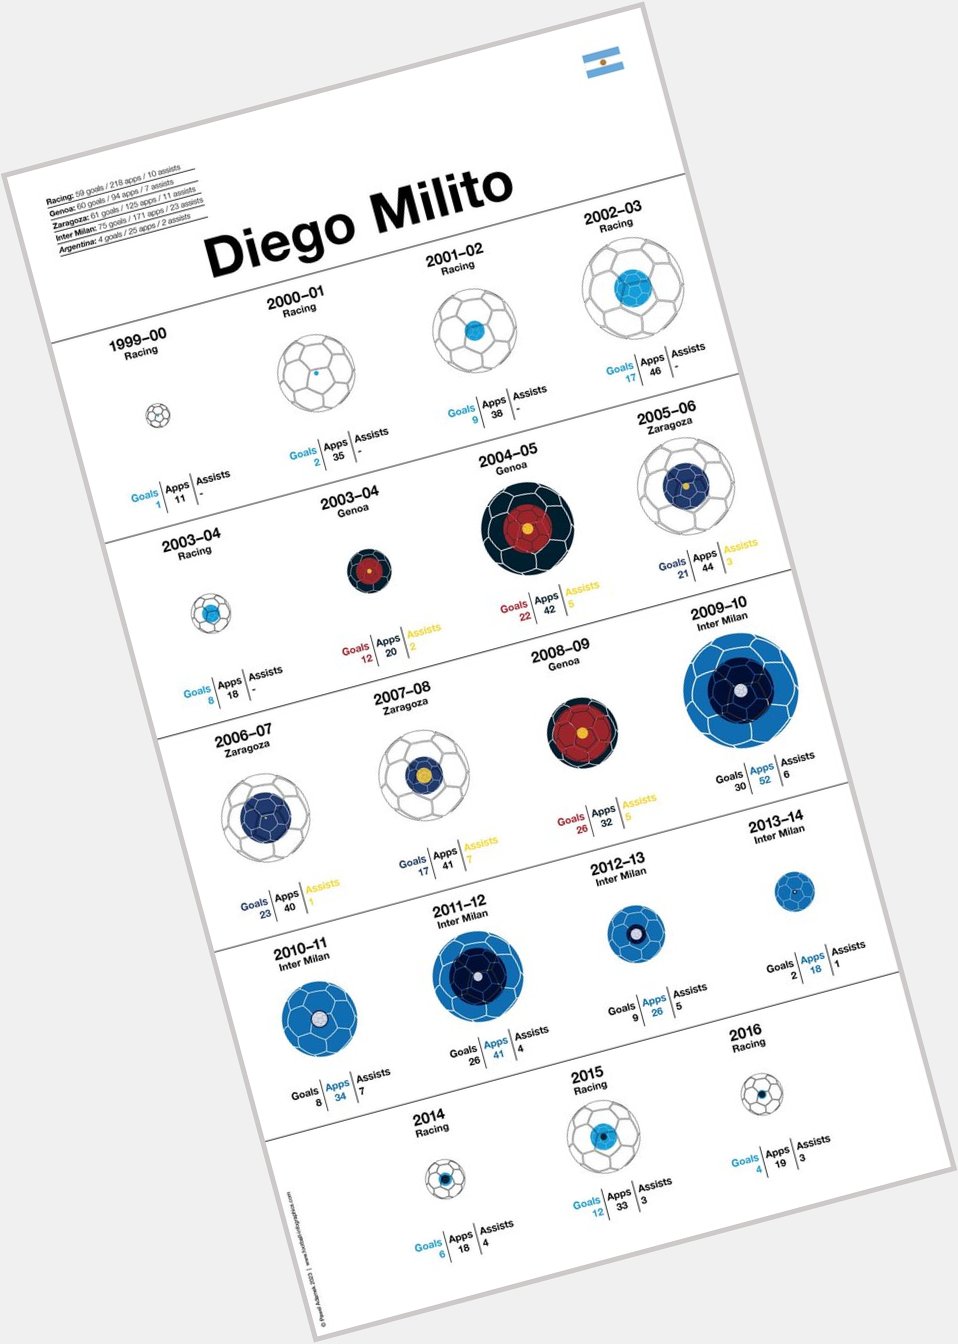 Happy Birthday to Diego Milito!     